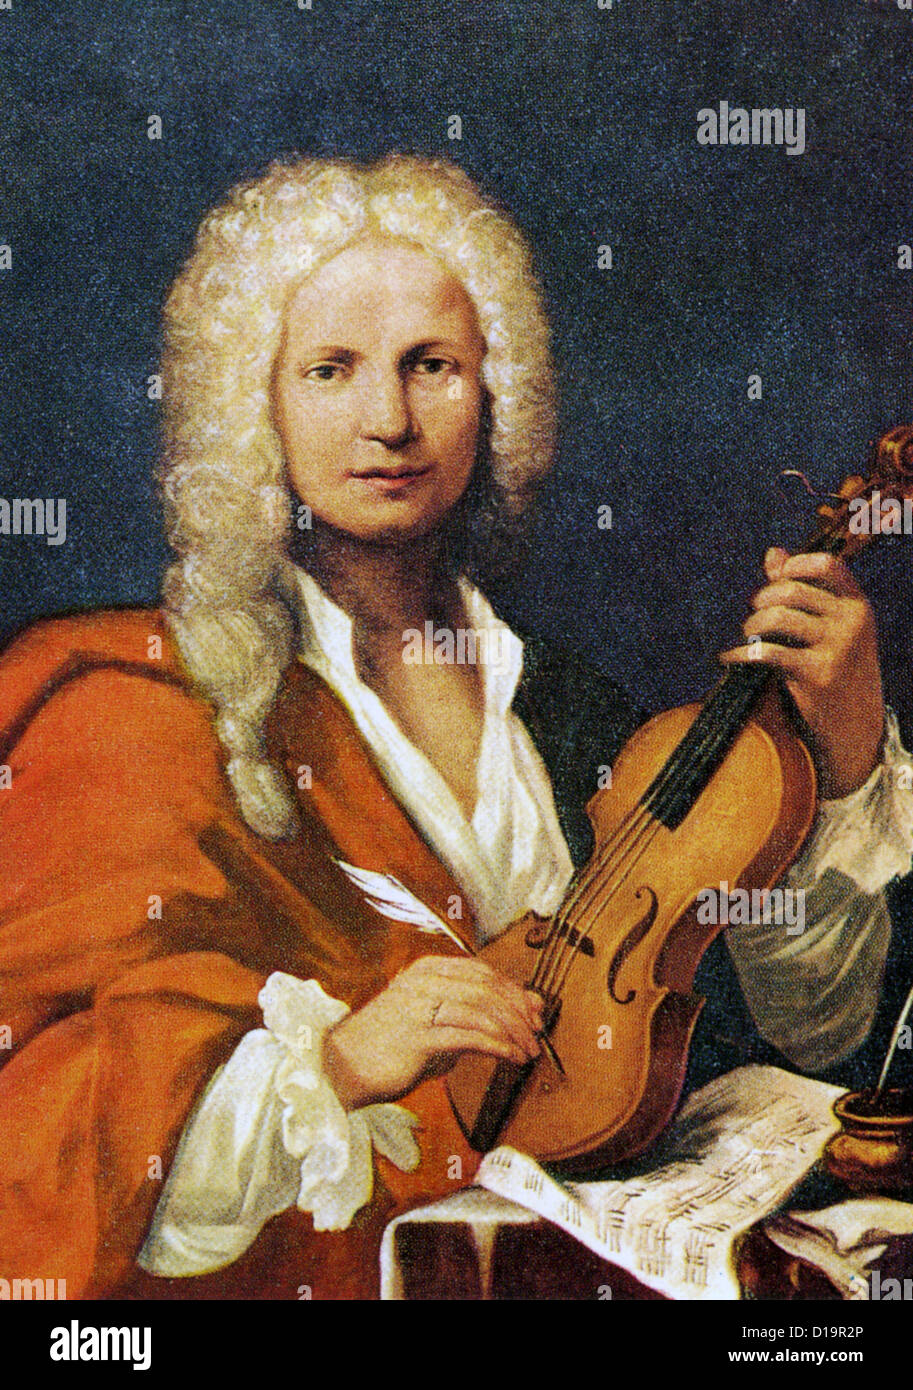 ANTONIO VIVALDI (1678-1741) Italian Baroque composer and violinist in portrait dated 1723 Stock Photo